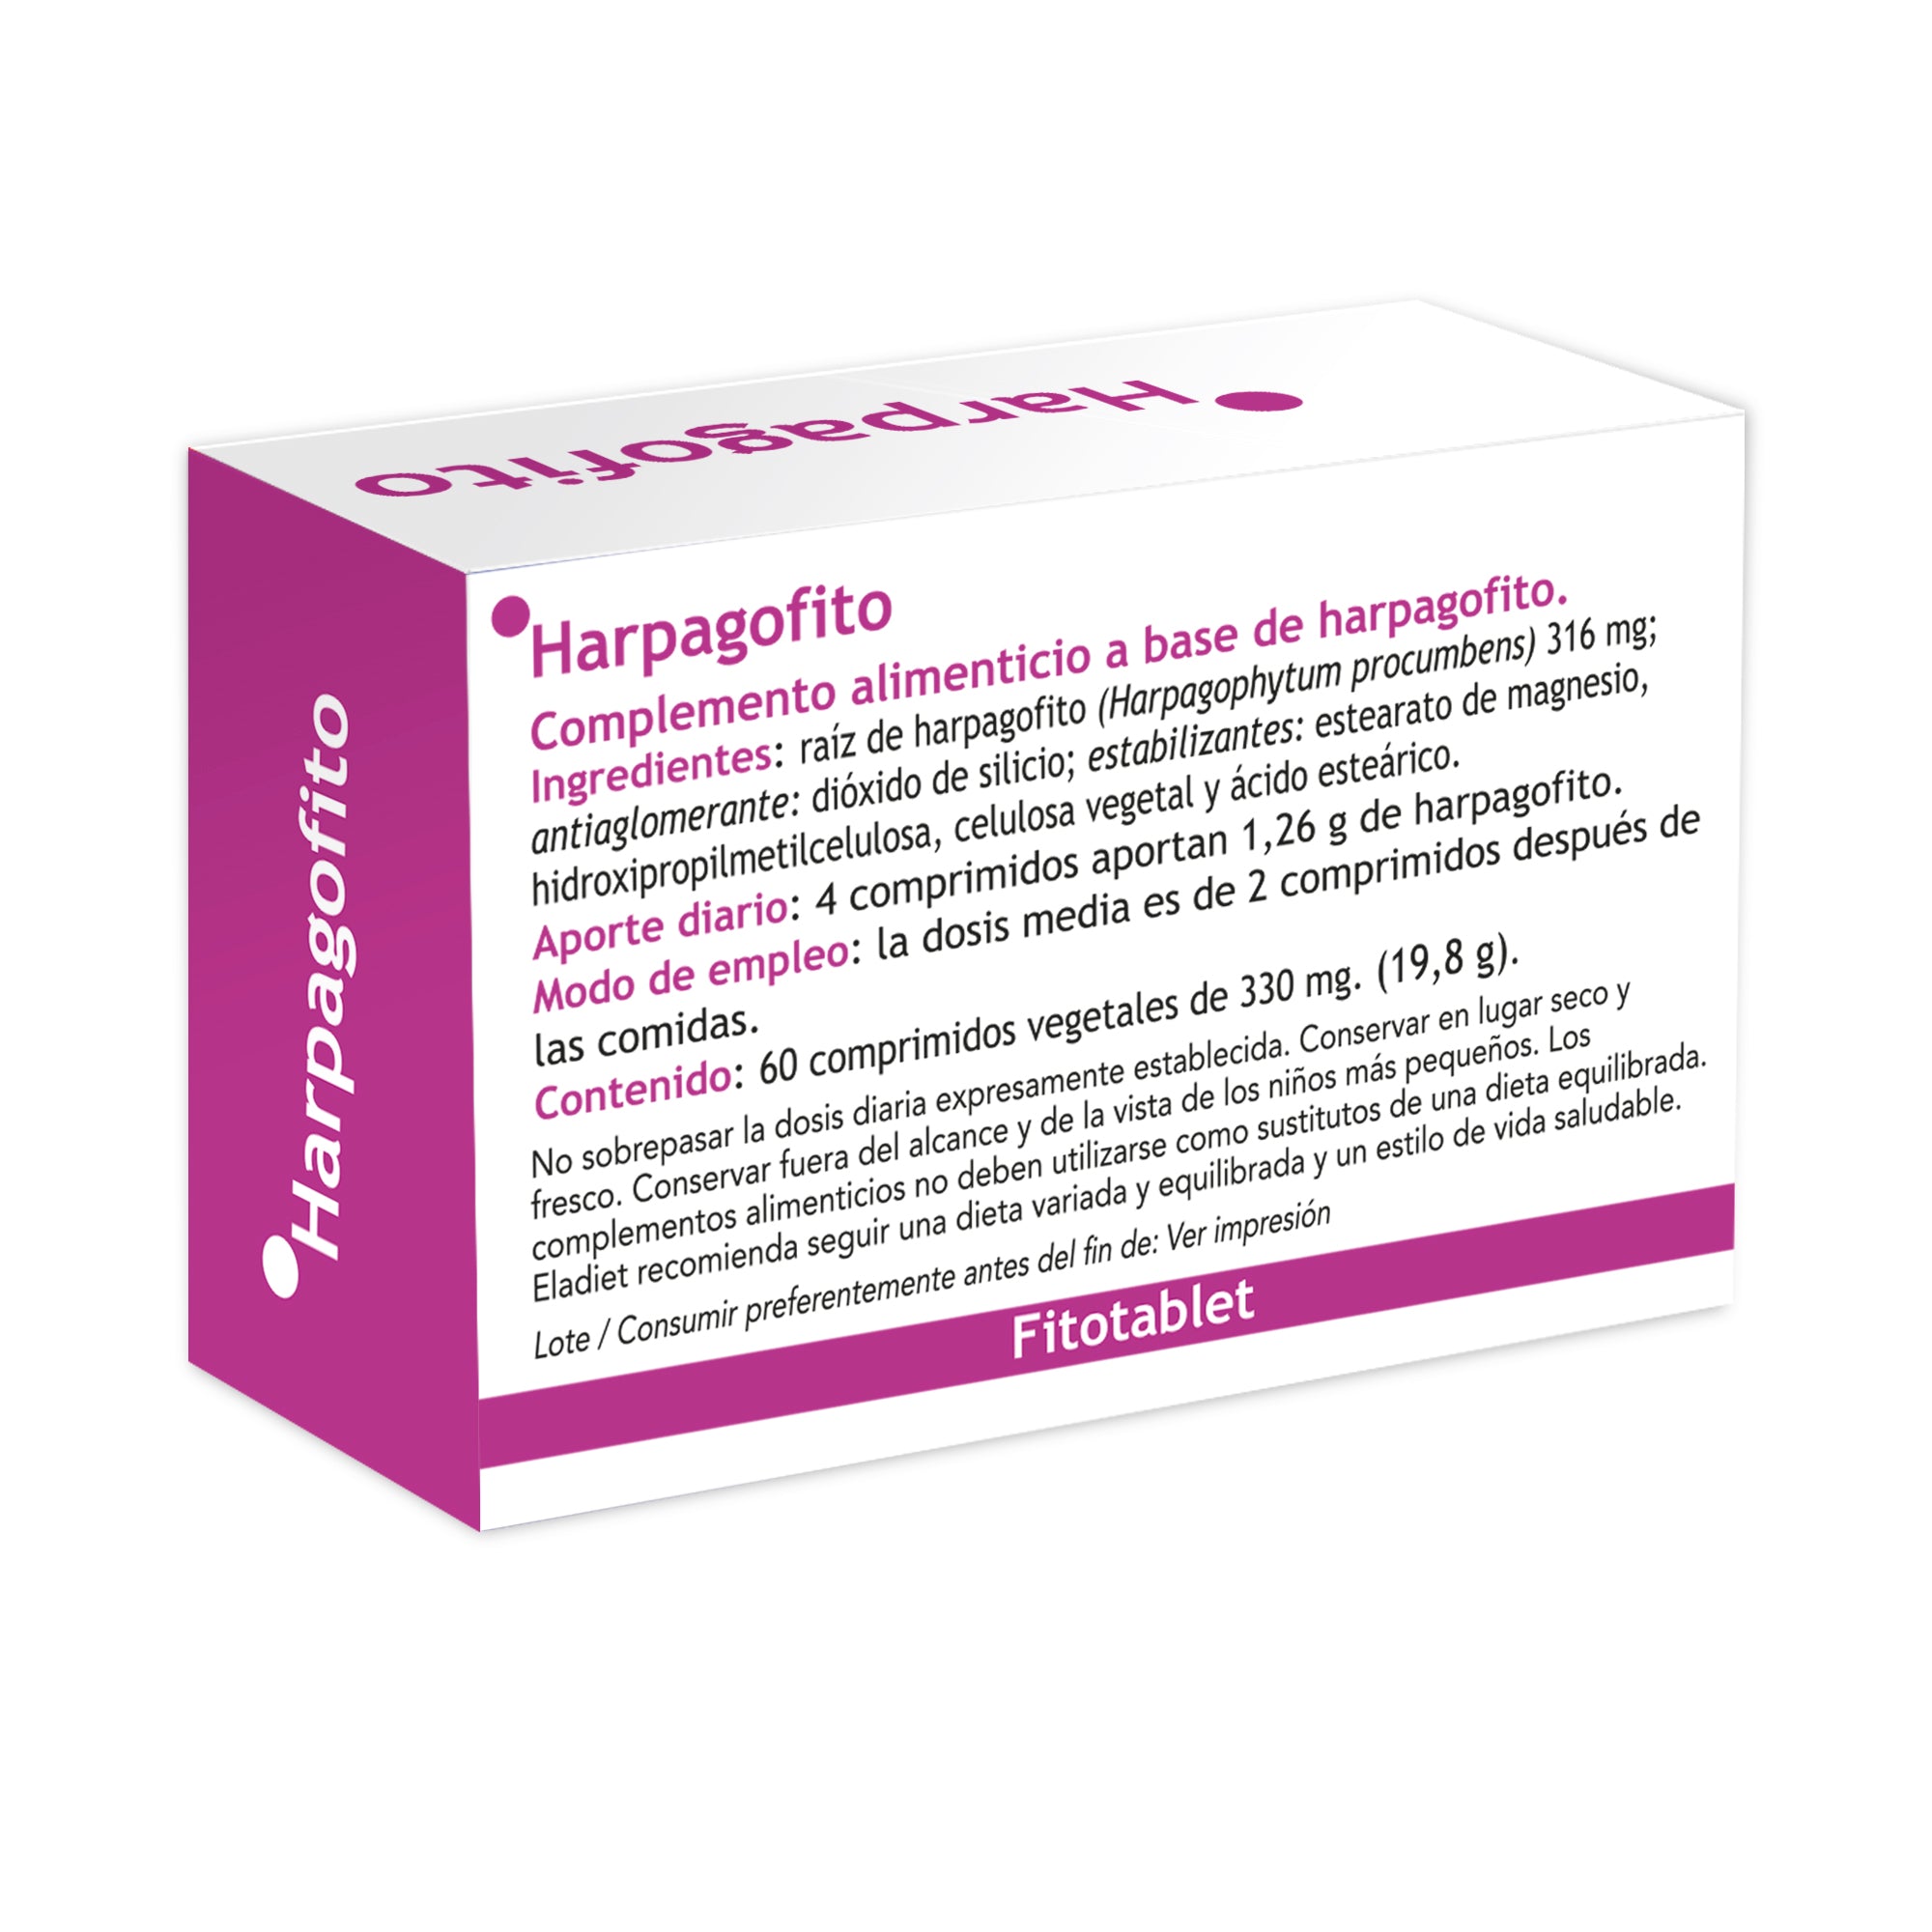 Eladiet - Fitotablet Harpagofito 330Mg 60 Comprimidos - Biopharmacia, Parafarmacia online